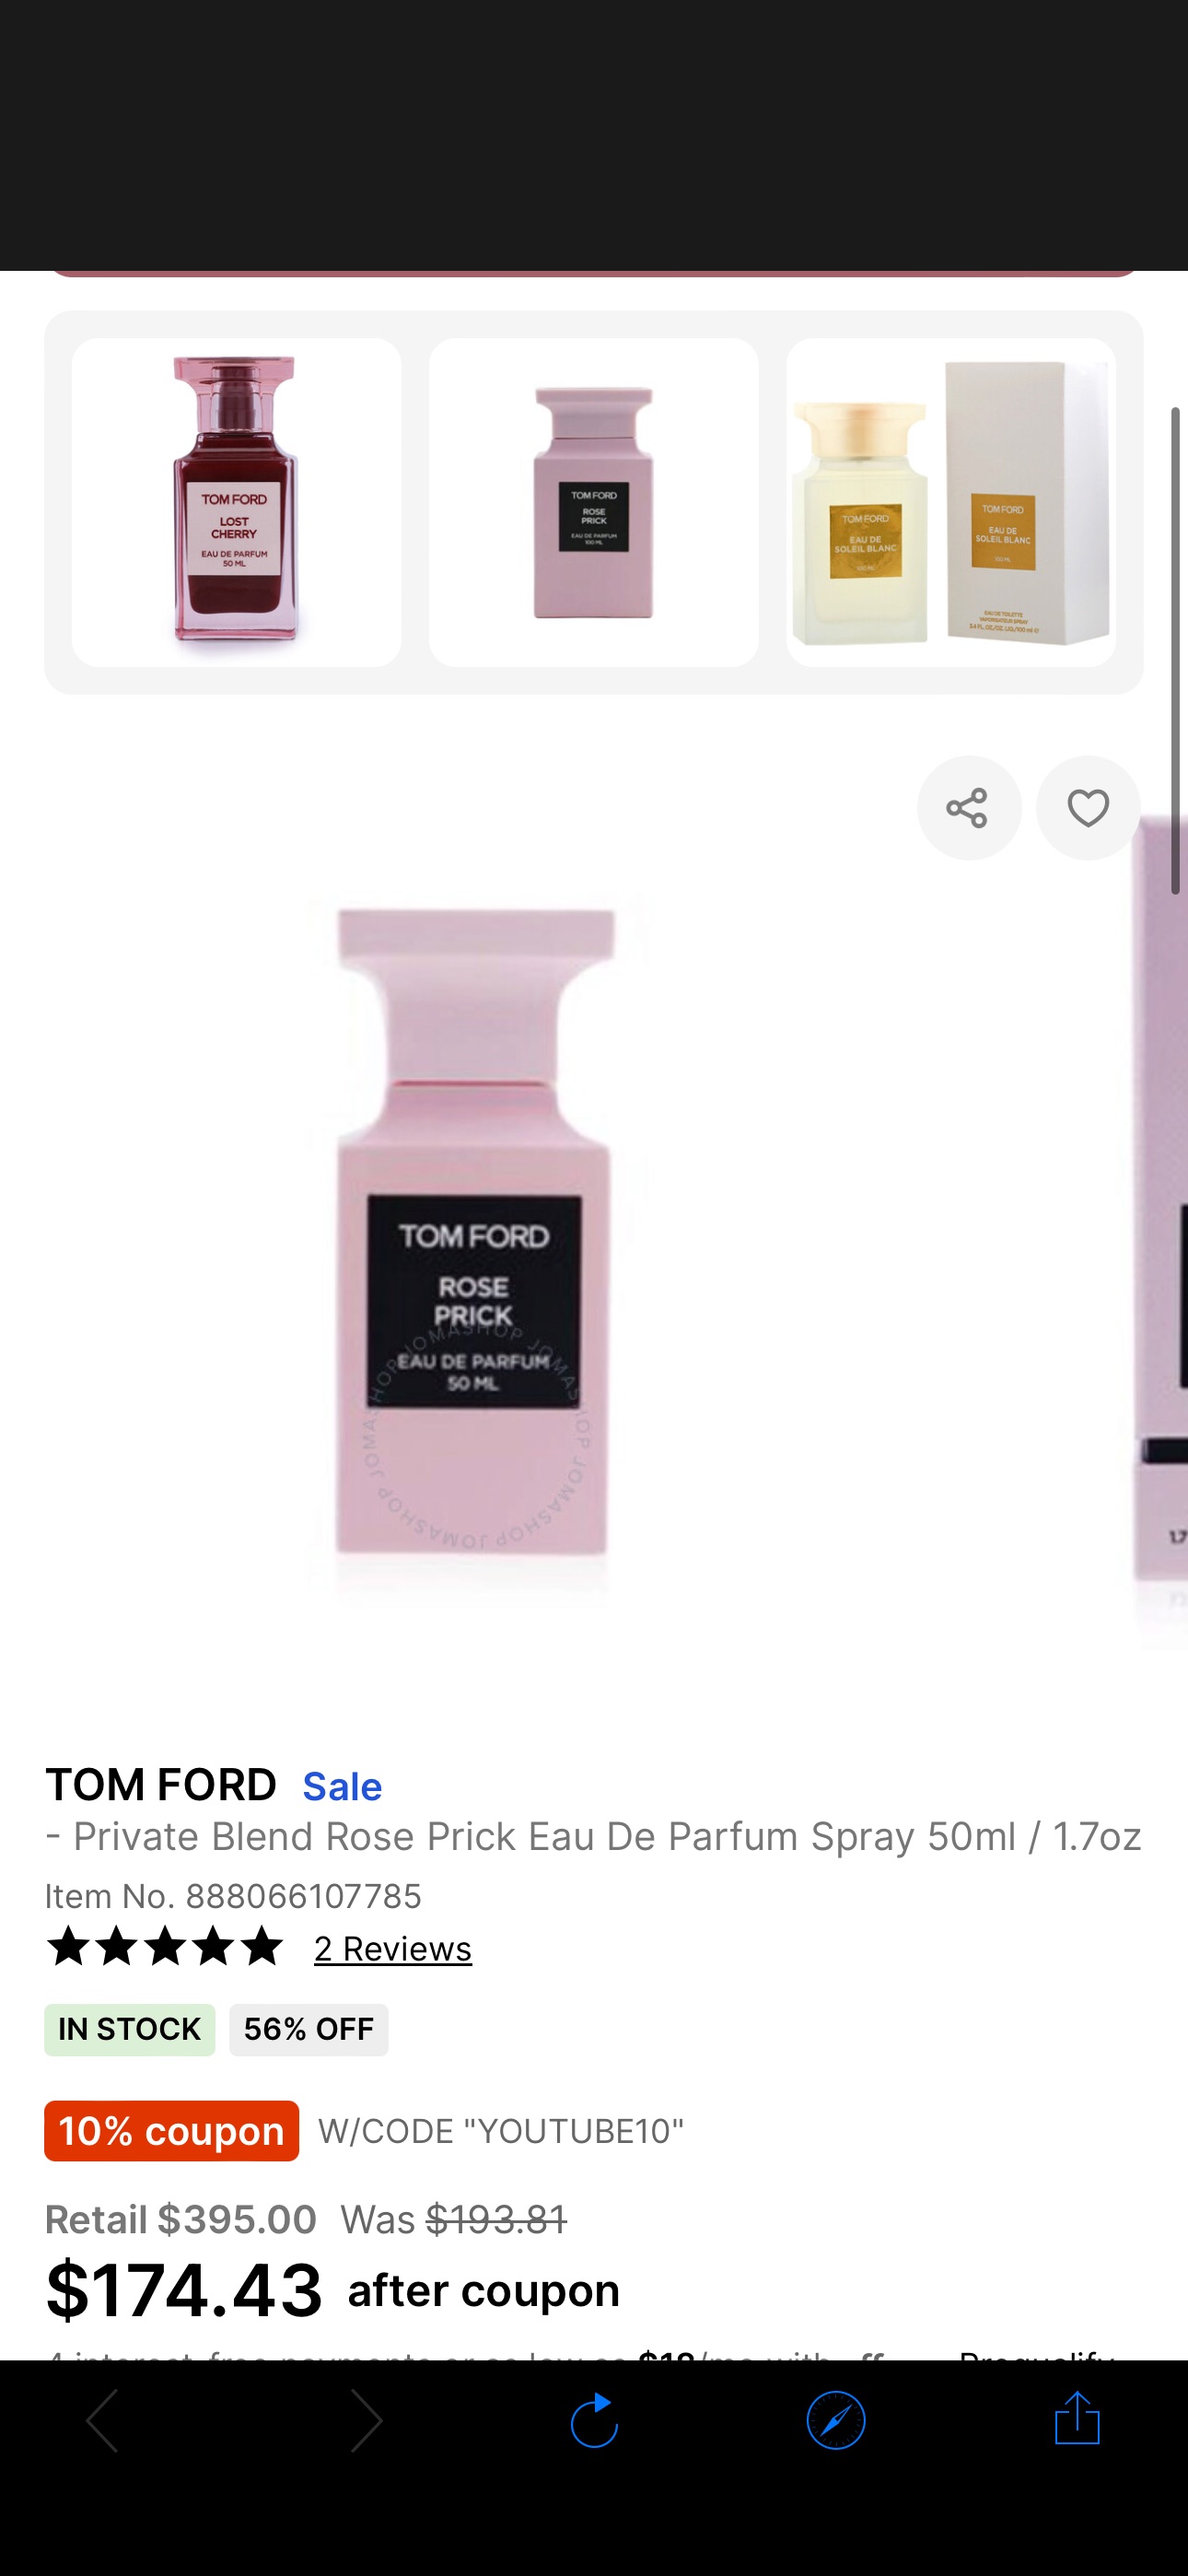 Tom Ford - Private Blend Rose Prick Eau De Parfum Spray 50ml / 1.7oz 888066107785 - Fragrances & Beauty, Private Blend - Jomashop